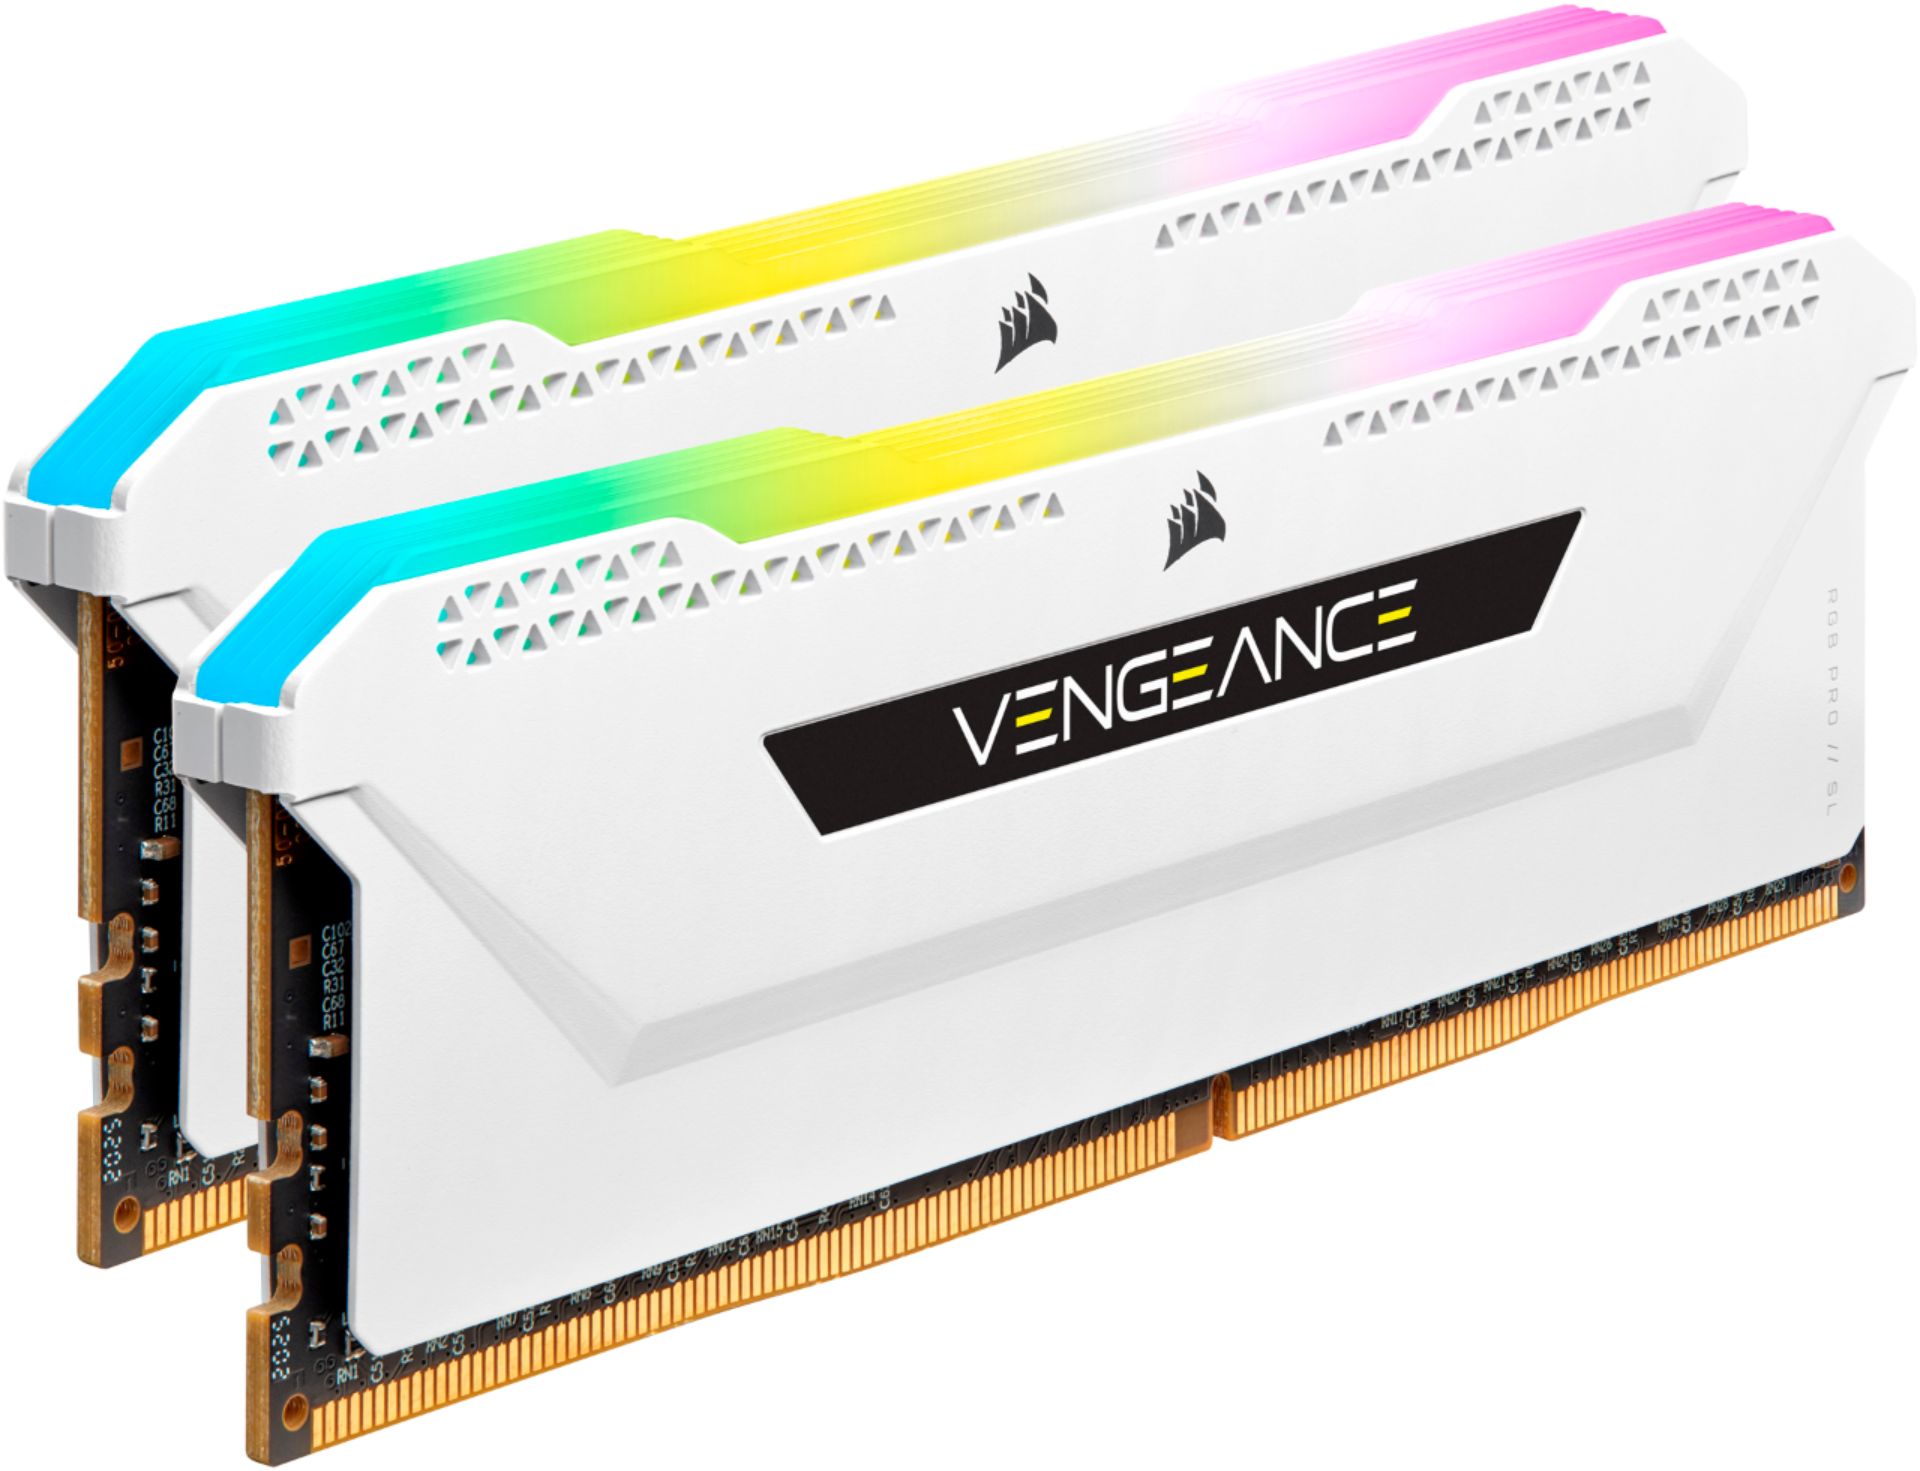 Corsair Vengeance RGB PRO 16GB DDR4-3200 Memory Kit Review